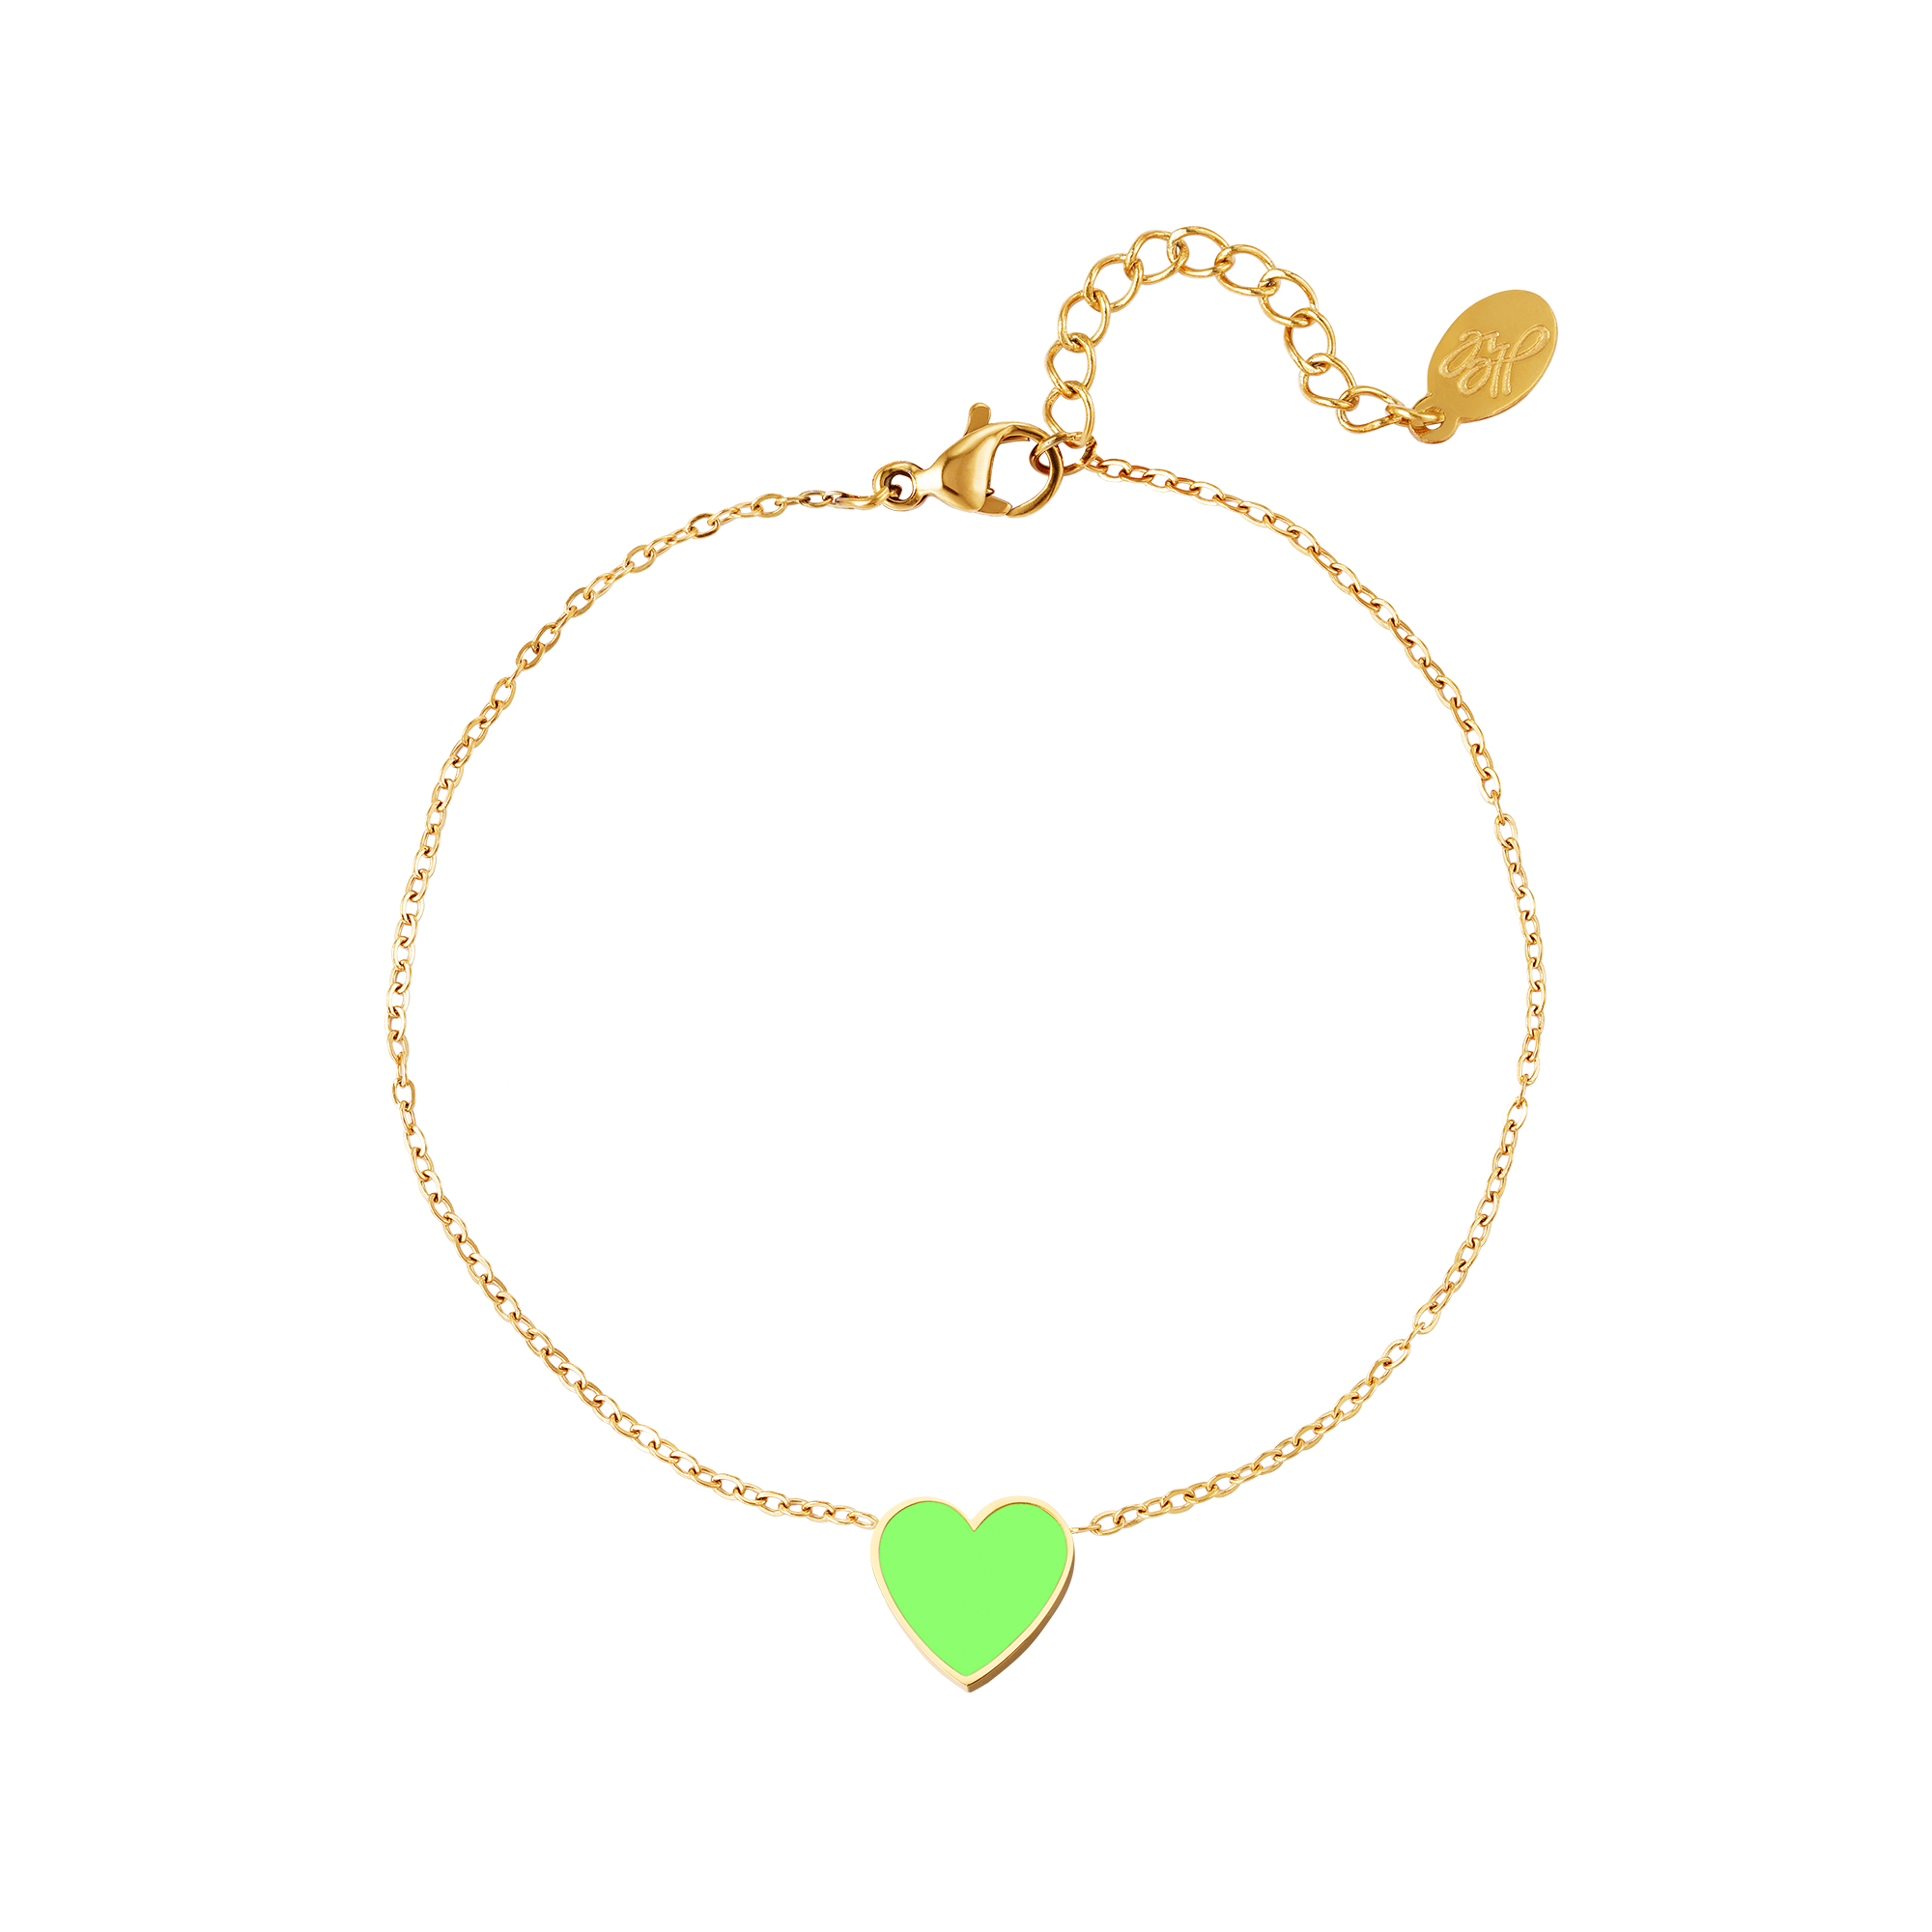 RVS Armband Colorful Heart gouden armband met groen hartje fashion sieraden kopen bestellen